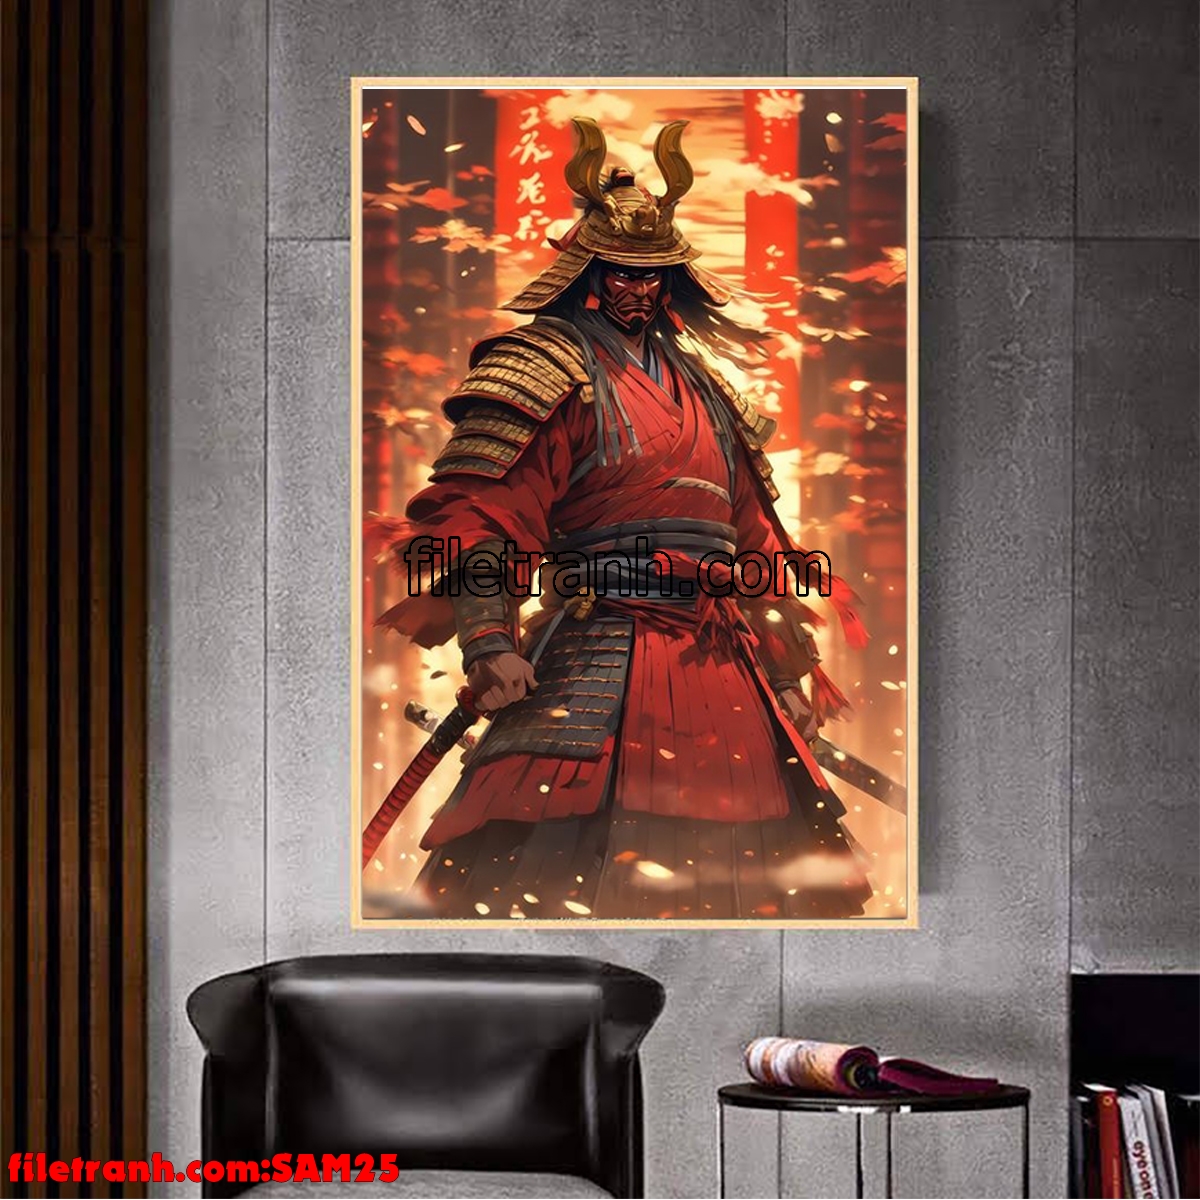 https://filetranh.com/samurai/file-tranh-samurai-vo-si-nhat-ban-sam25.html